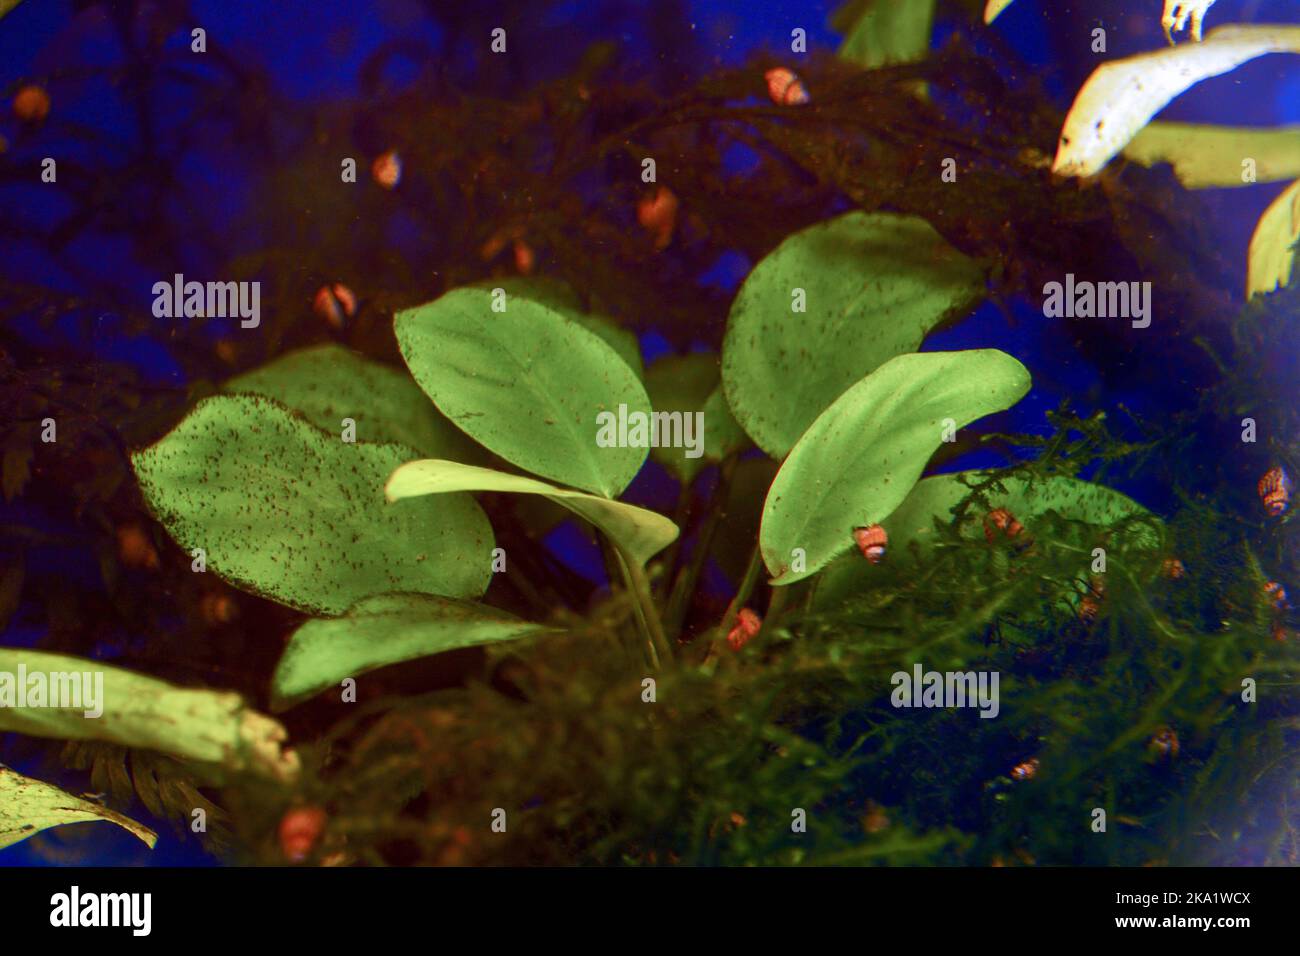 Aquarium plant anubias with Compsopogon dots on the leaves. Soft focus Stock Photo